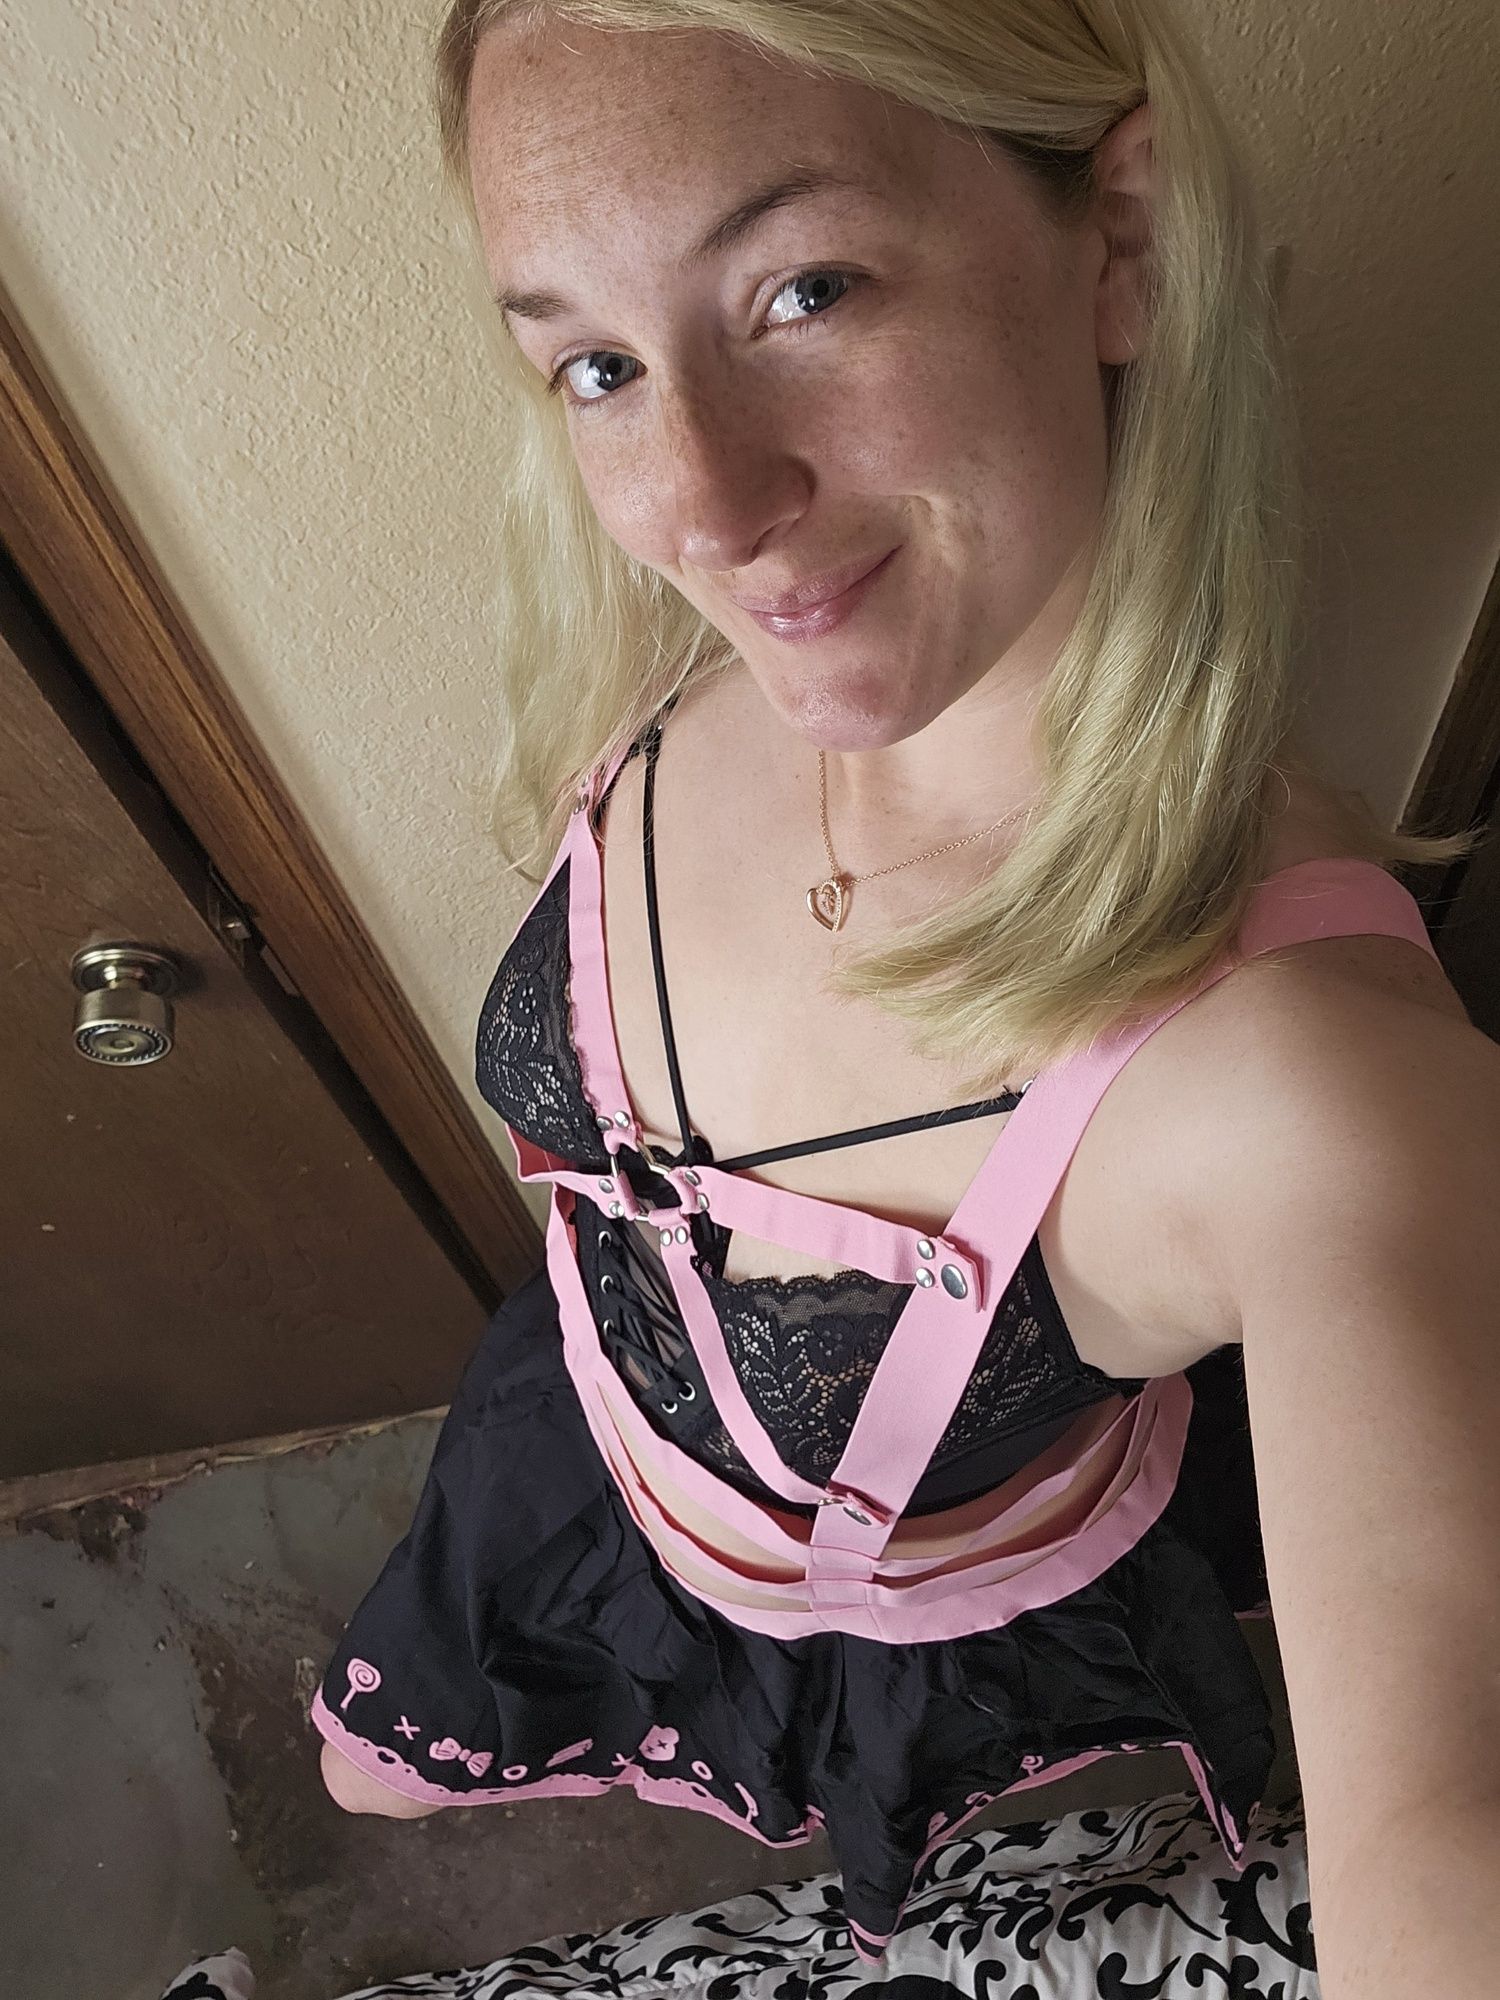 Mama_Foxx94 - A fan bought me a slutty kitty dress!